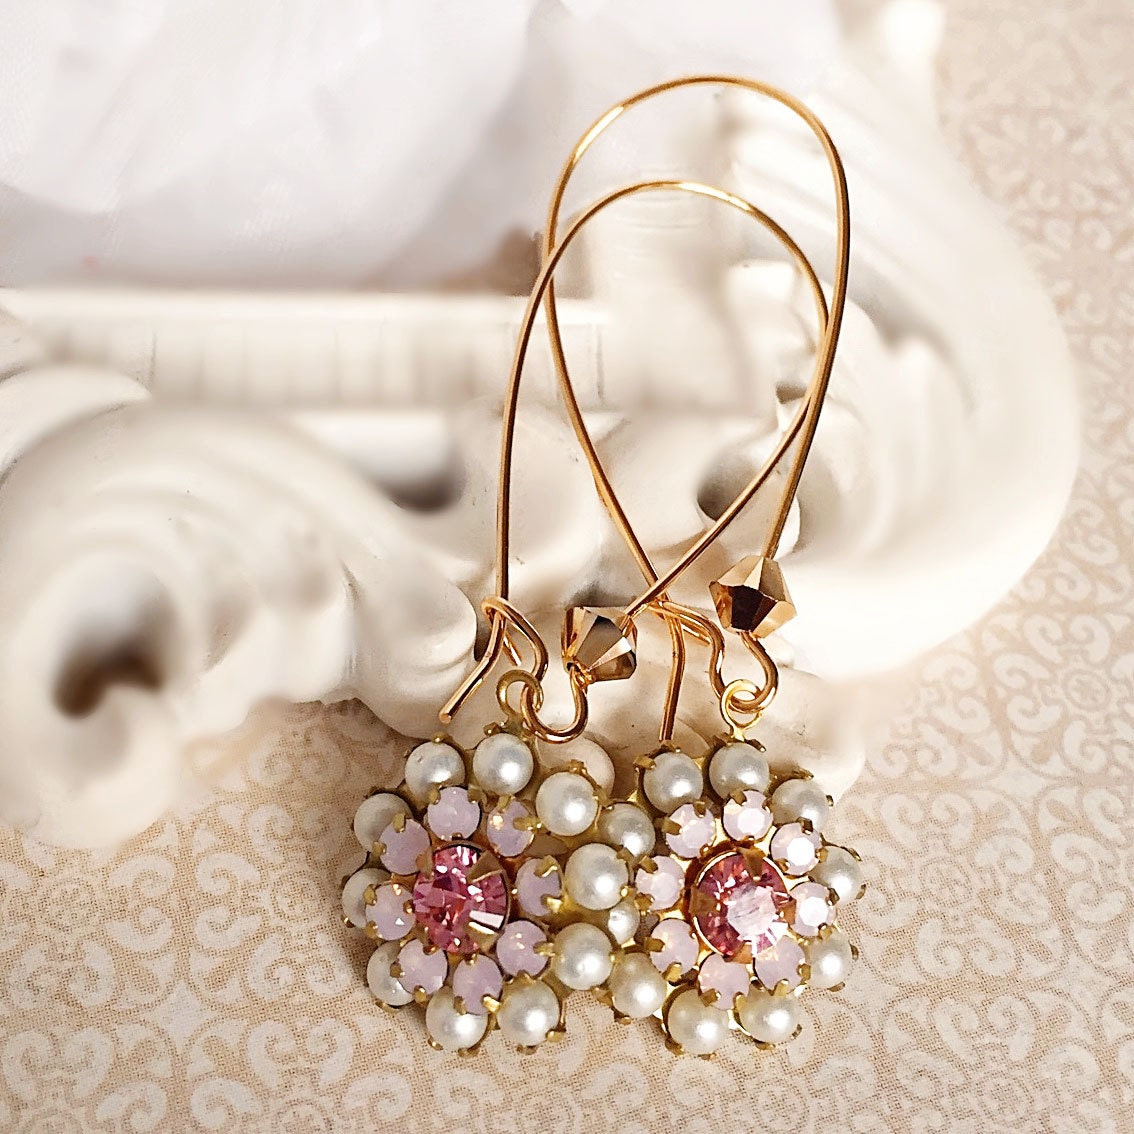 Wedding Earrings - Romantic - Victorian Earrings - Bridesmaid Gifts - FIORE Innocence